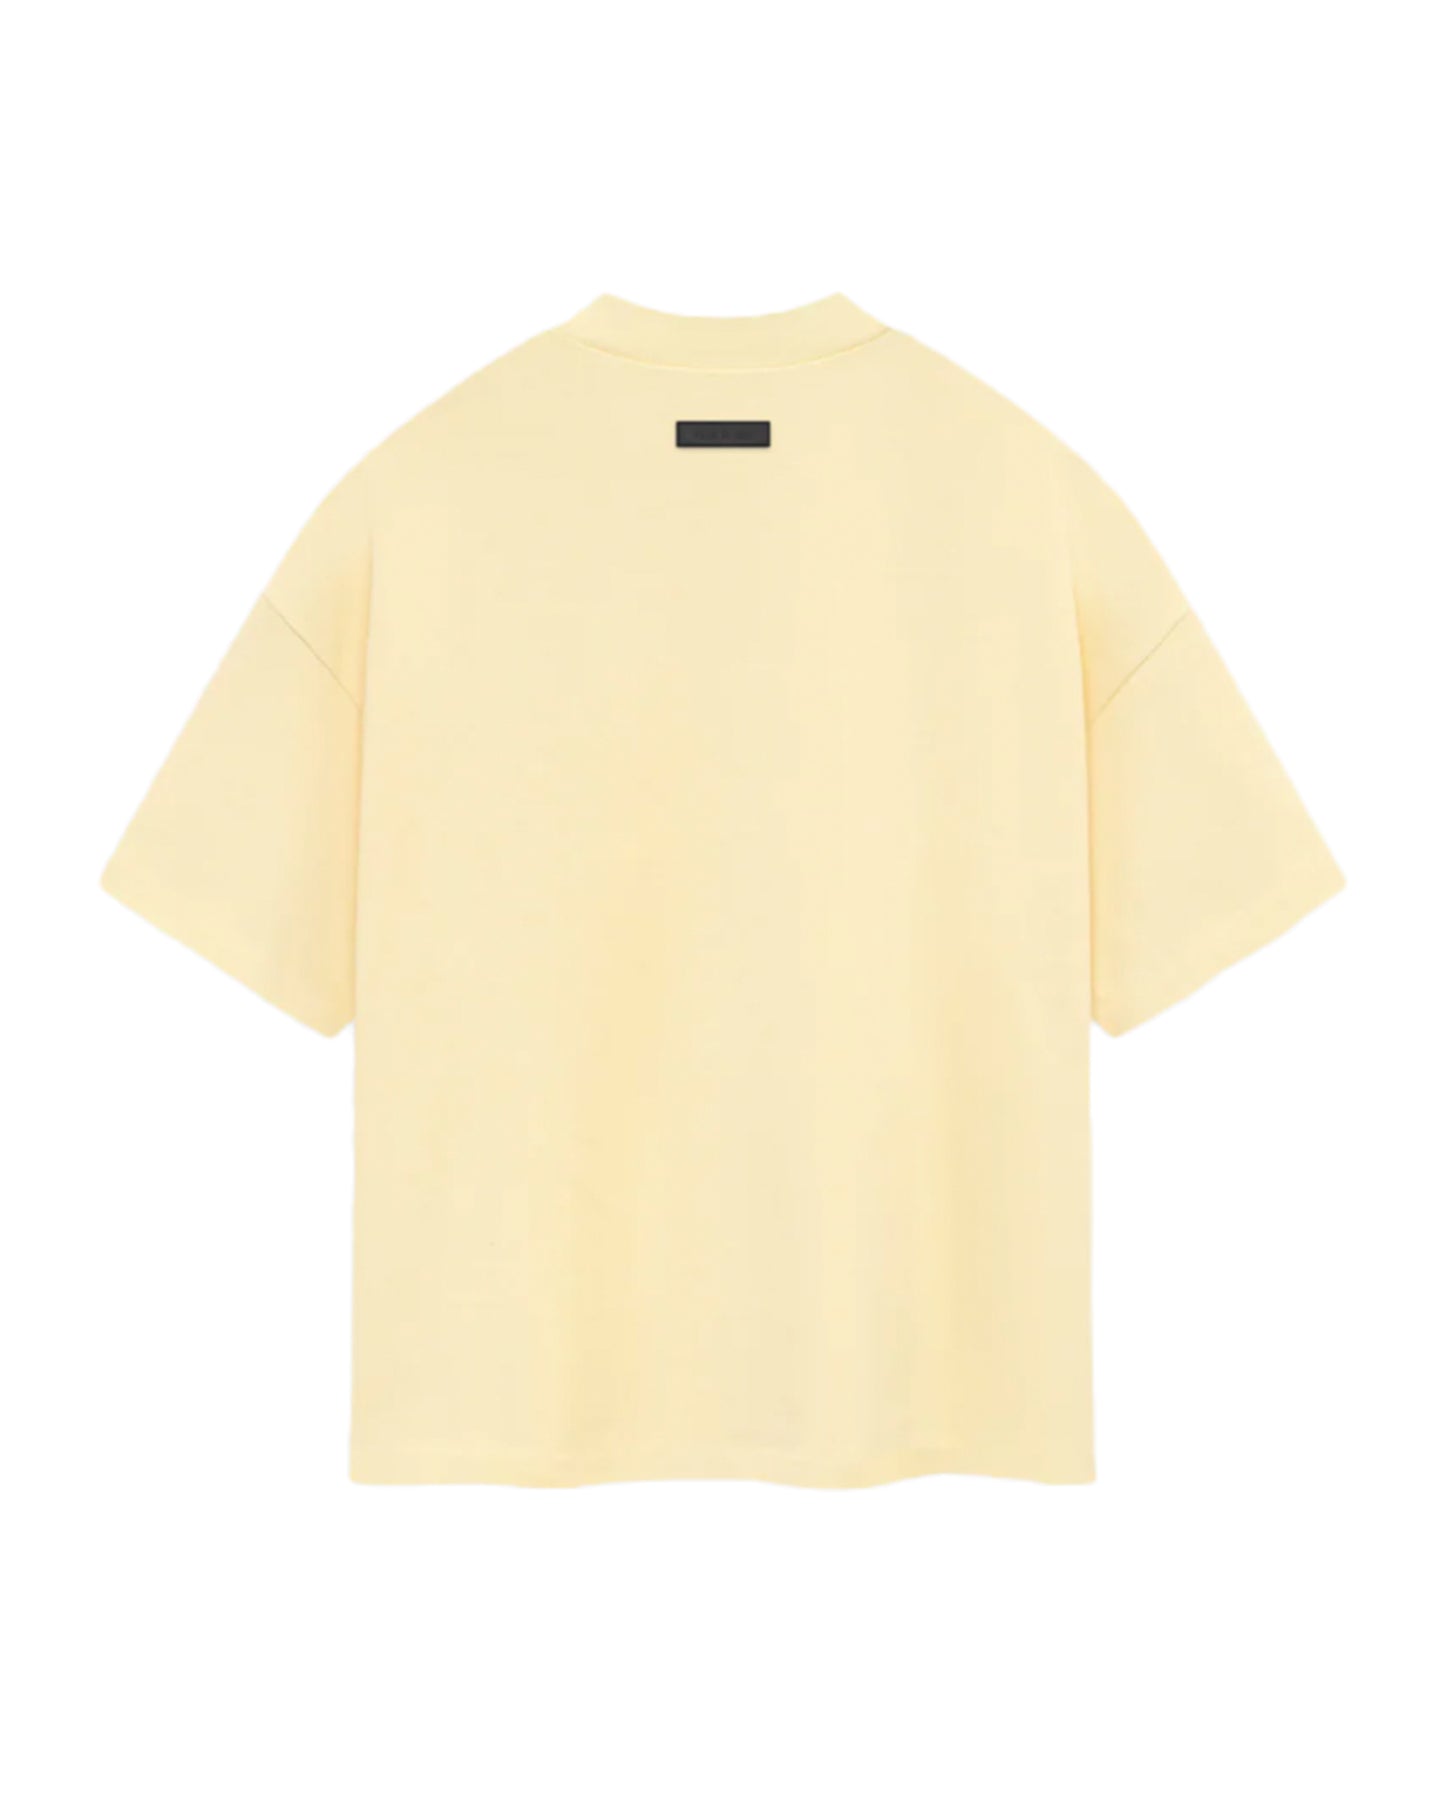 CREWNECK T-SHIRT(クルーネックTシャツ) Garden Yellow